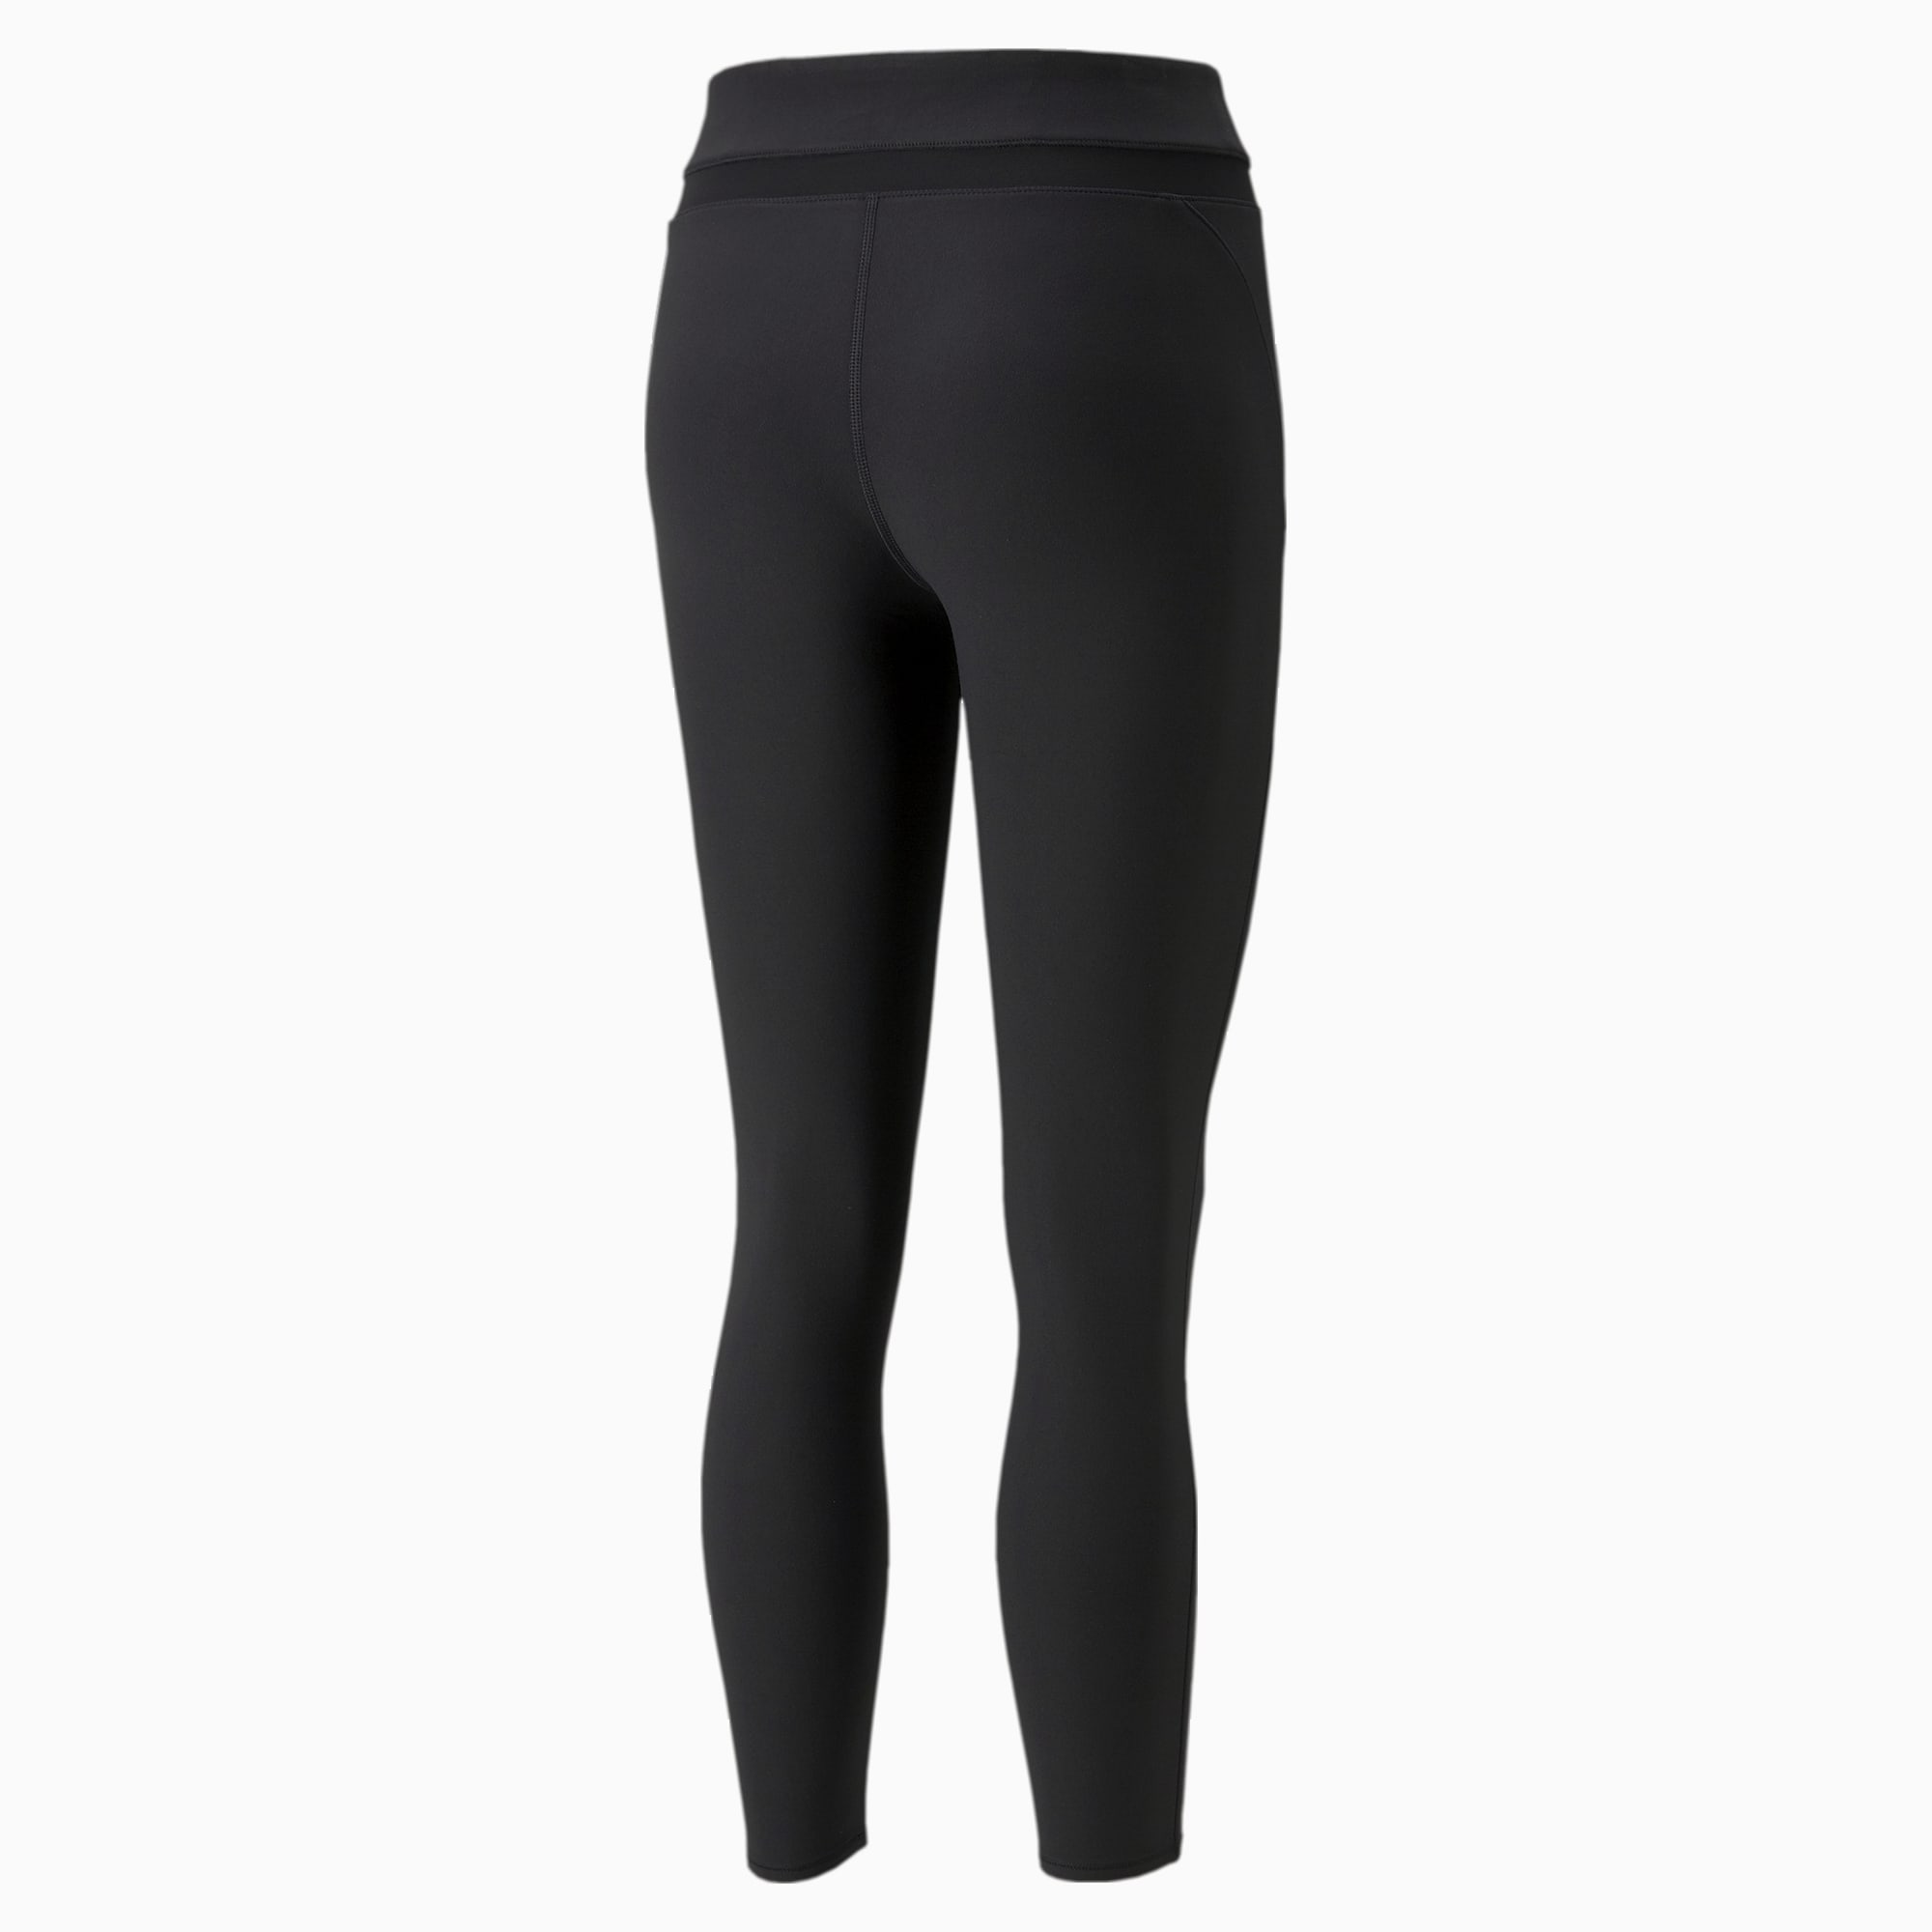 Wjskv Mesh Energy Tights Solid Pocket Elastic Yoga Pants Women Running  Training Black Gym Legging Fitness Female Sports Leggings,black, Xl